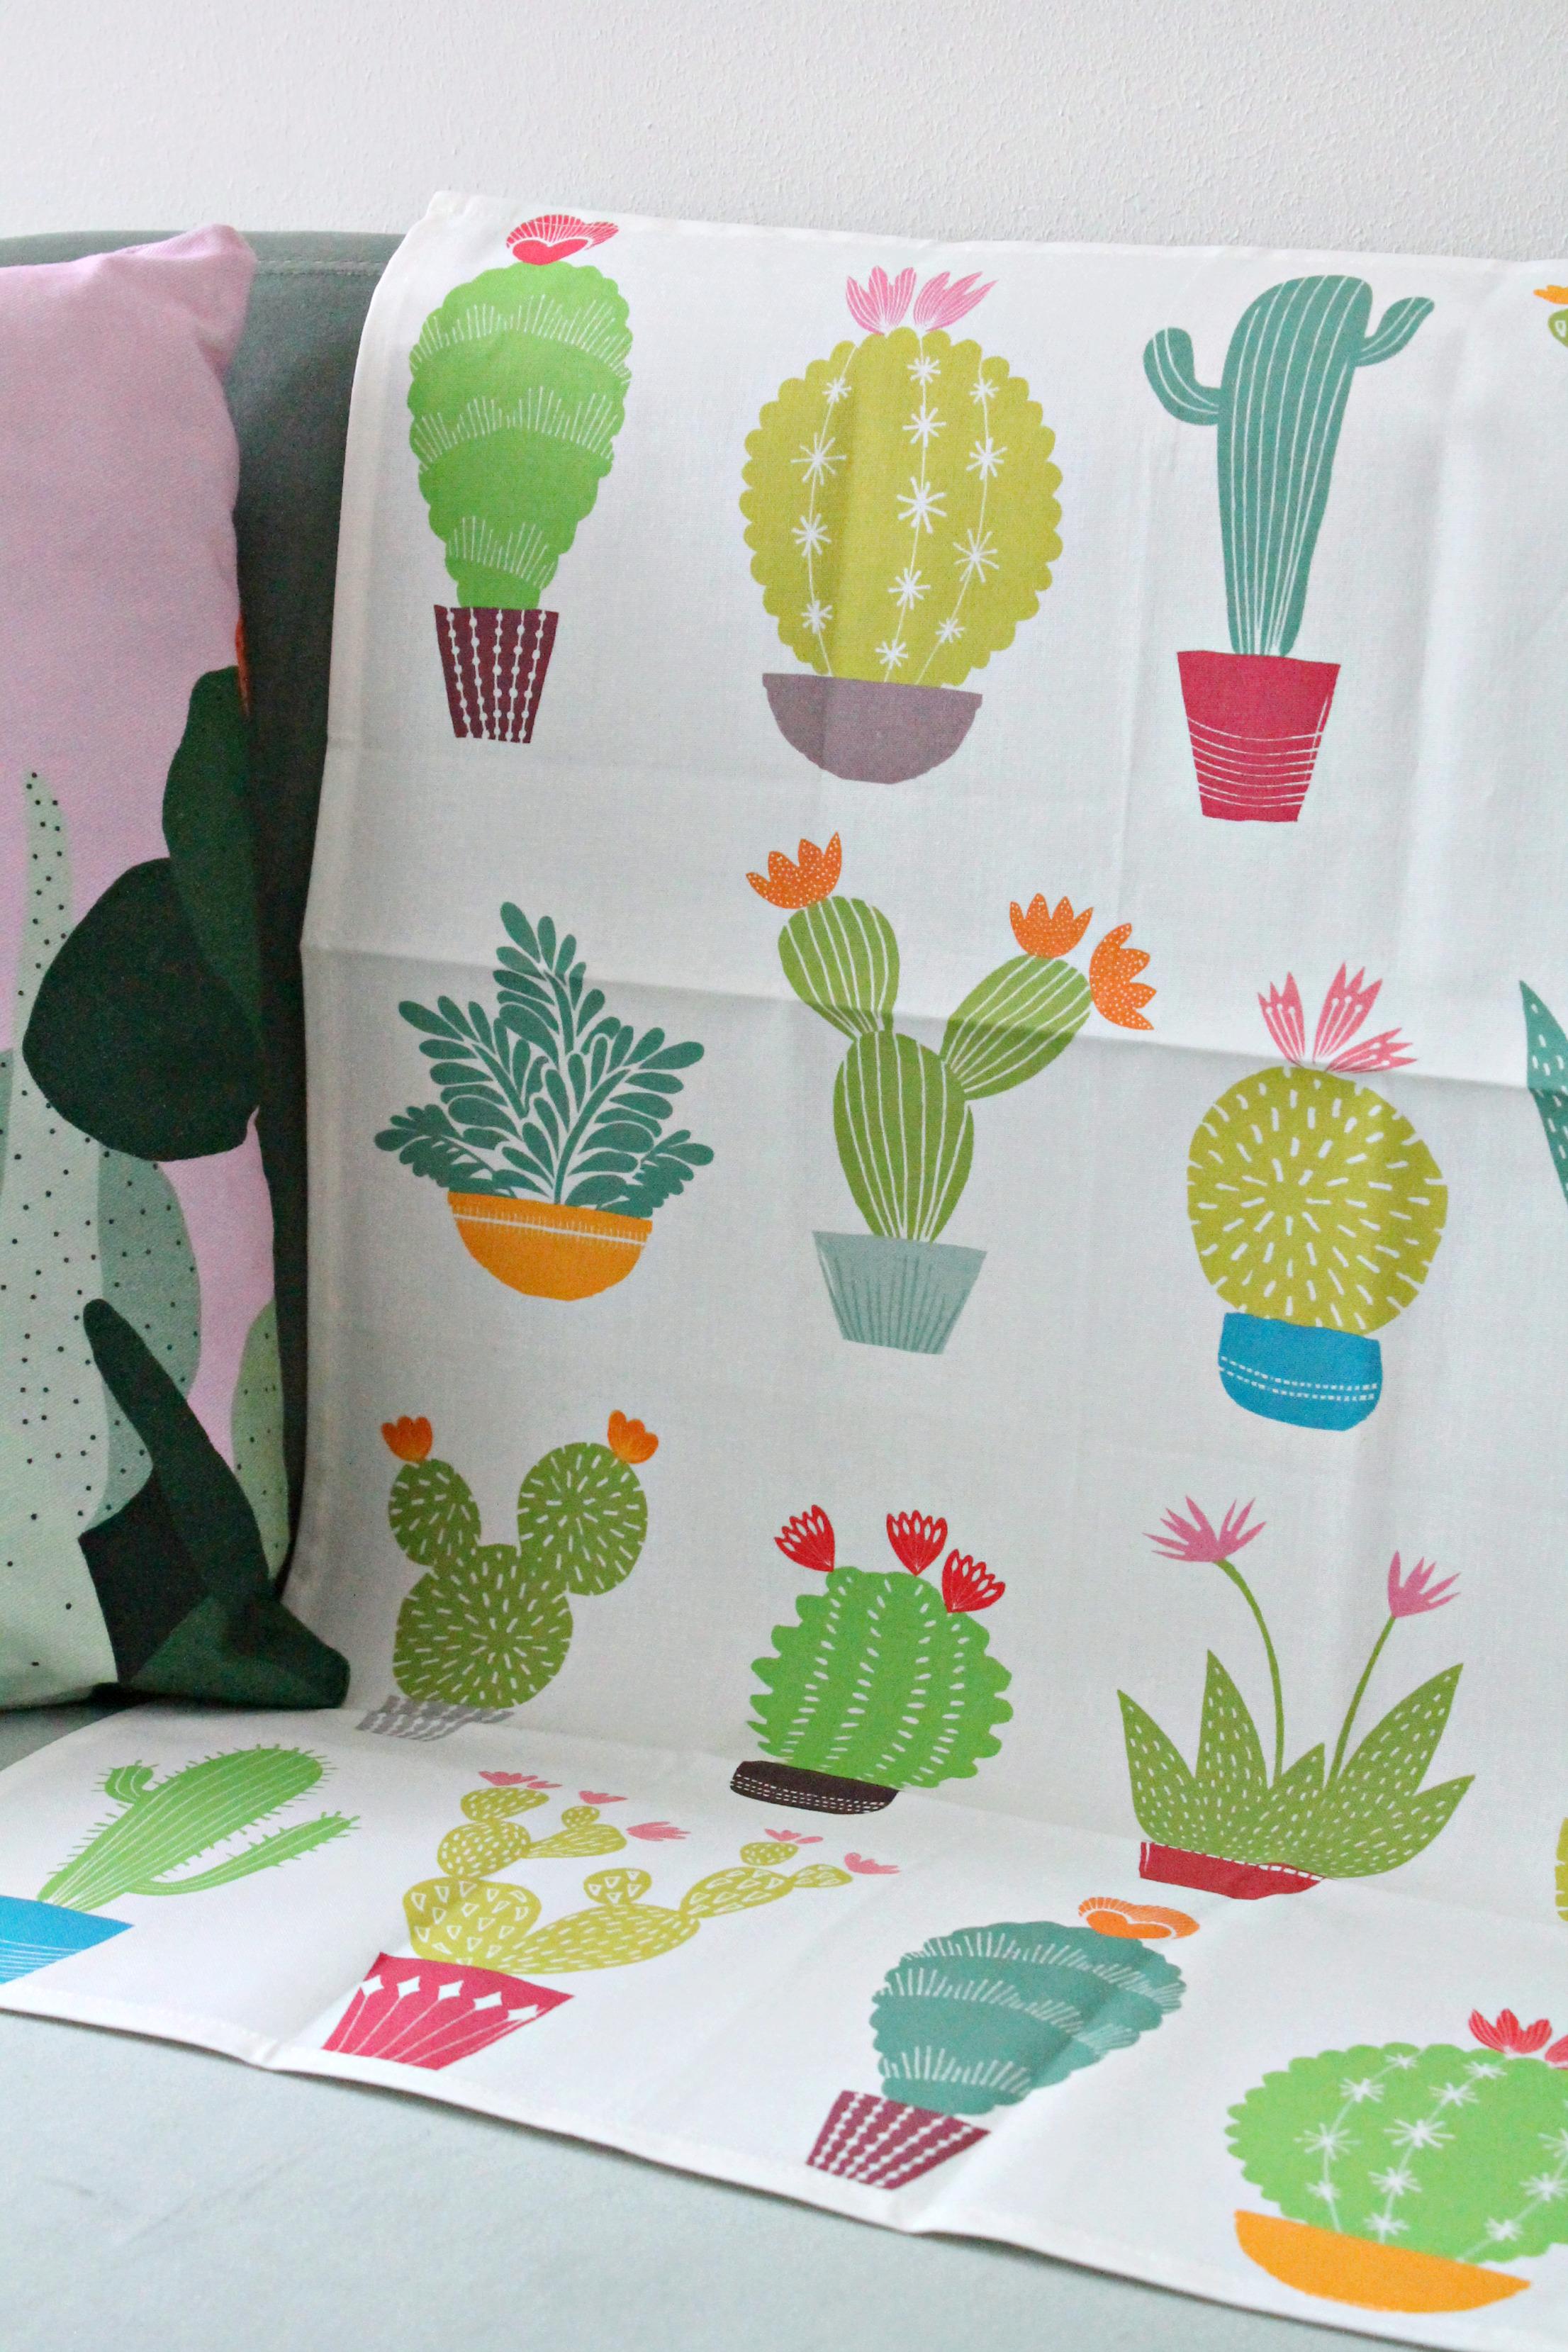 Maggie-Magoo-designs-cacti-tea-towel-photo-by-Geraldine-Tan-Little-Big-Bell